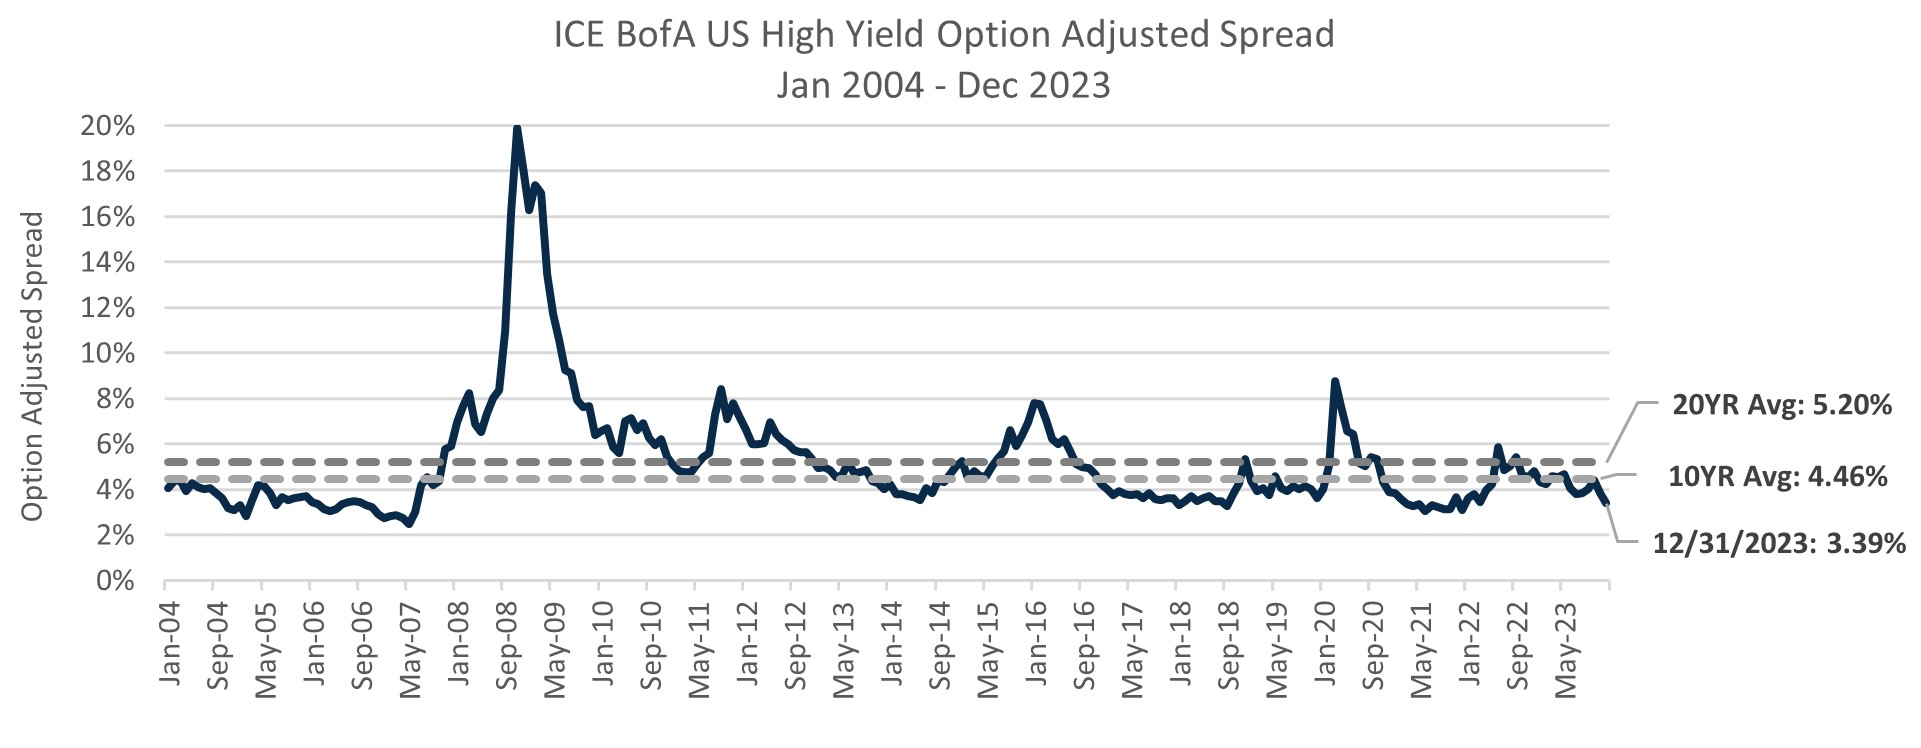 ICE BofA US High Yi eld Option Adjusted Spread Jan 2004 - Dec 2023